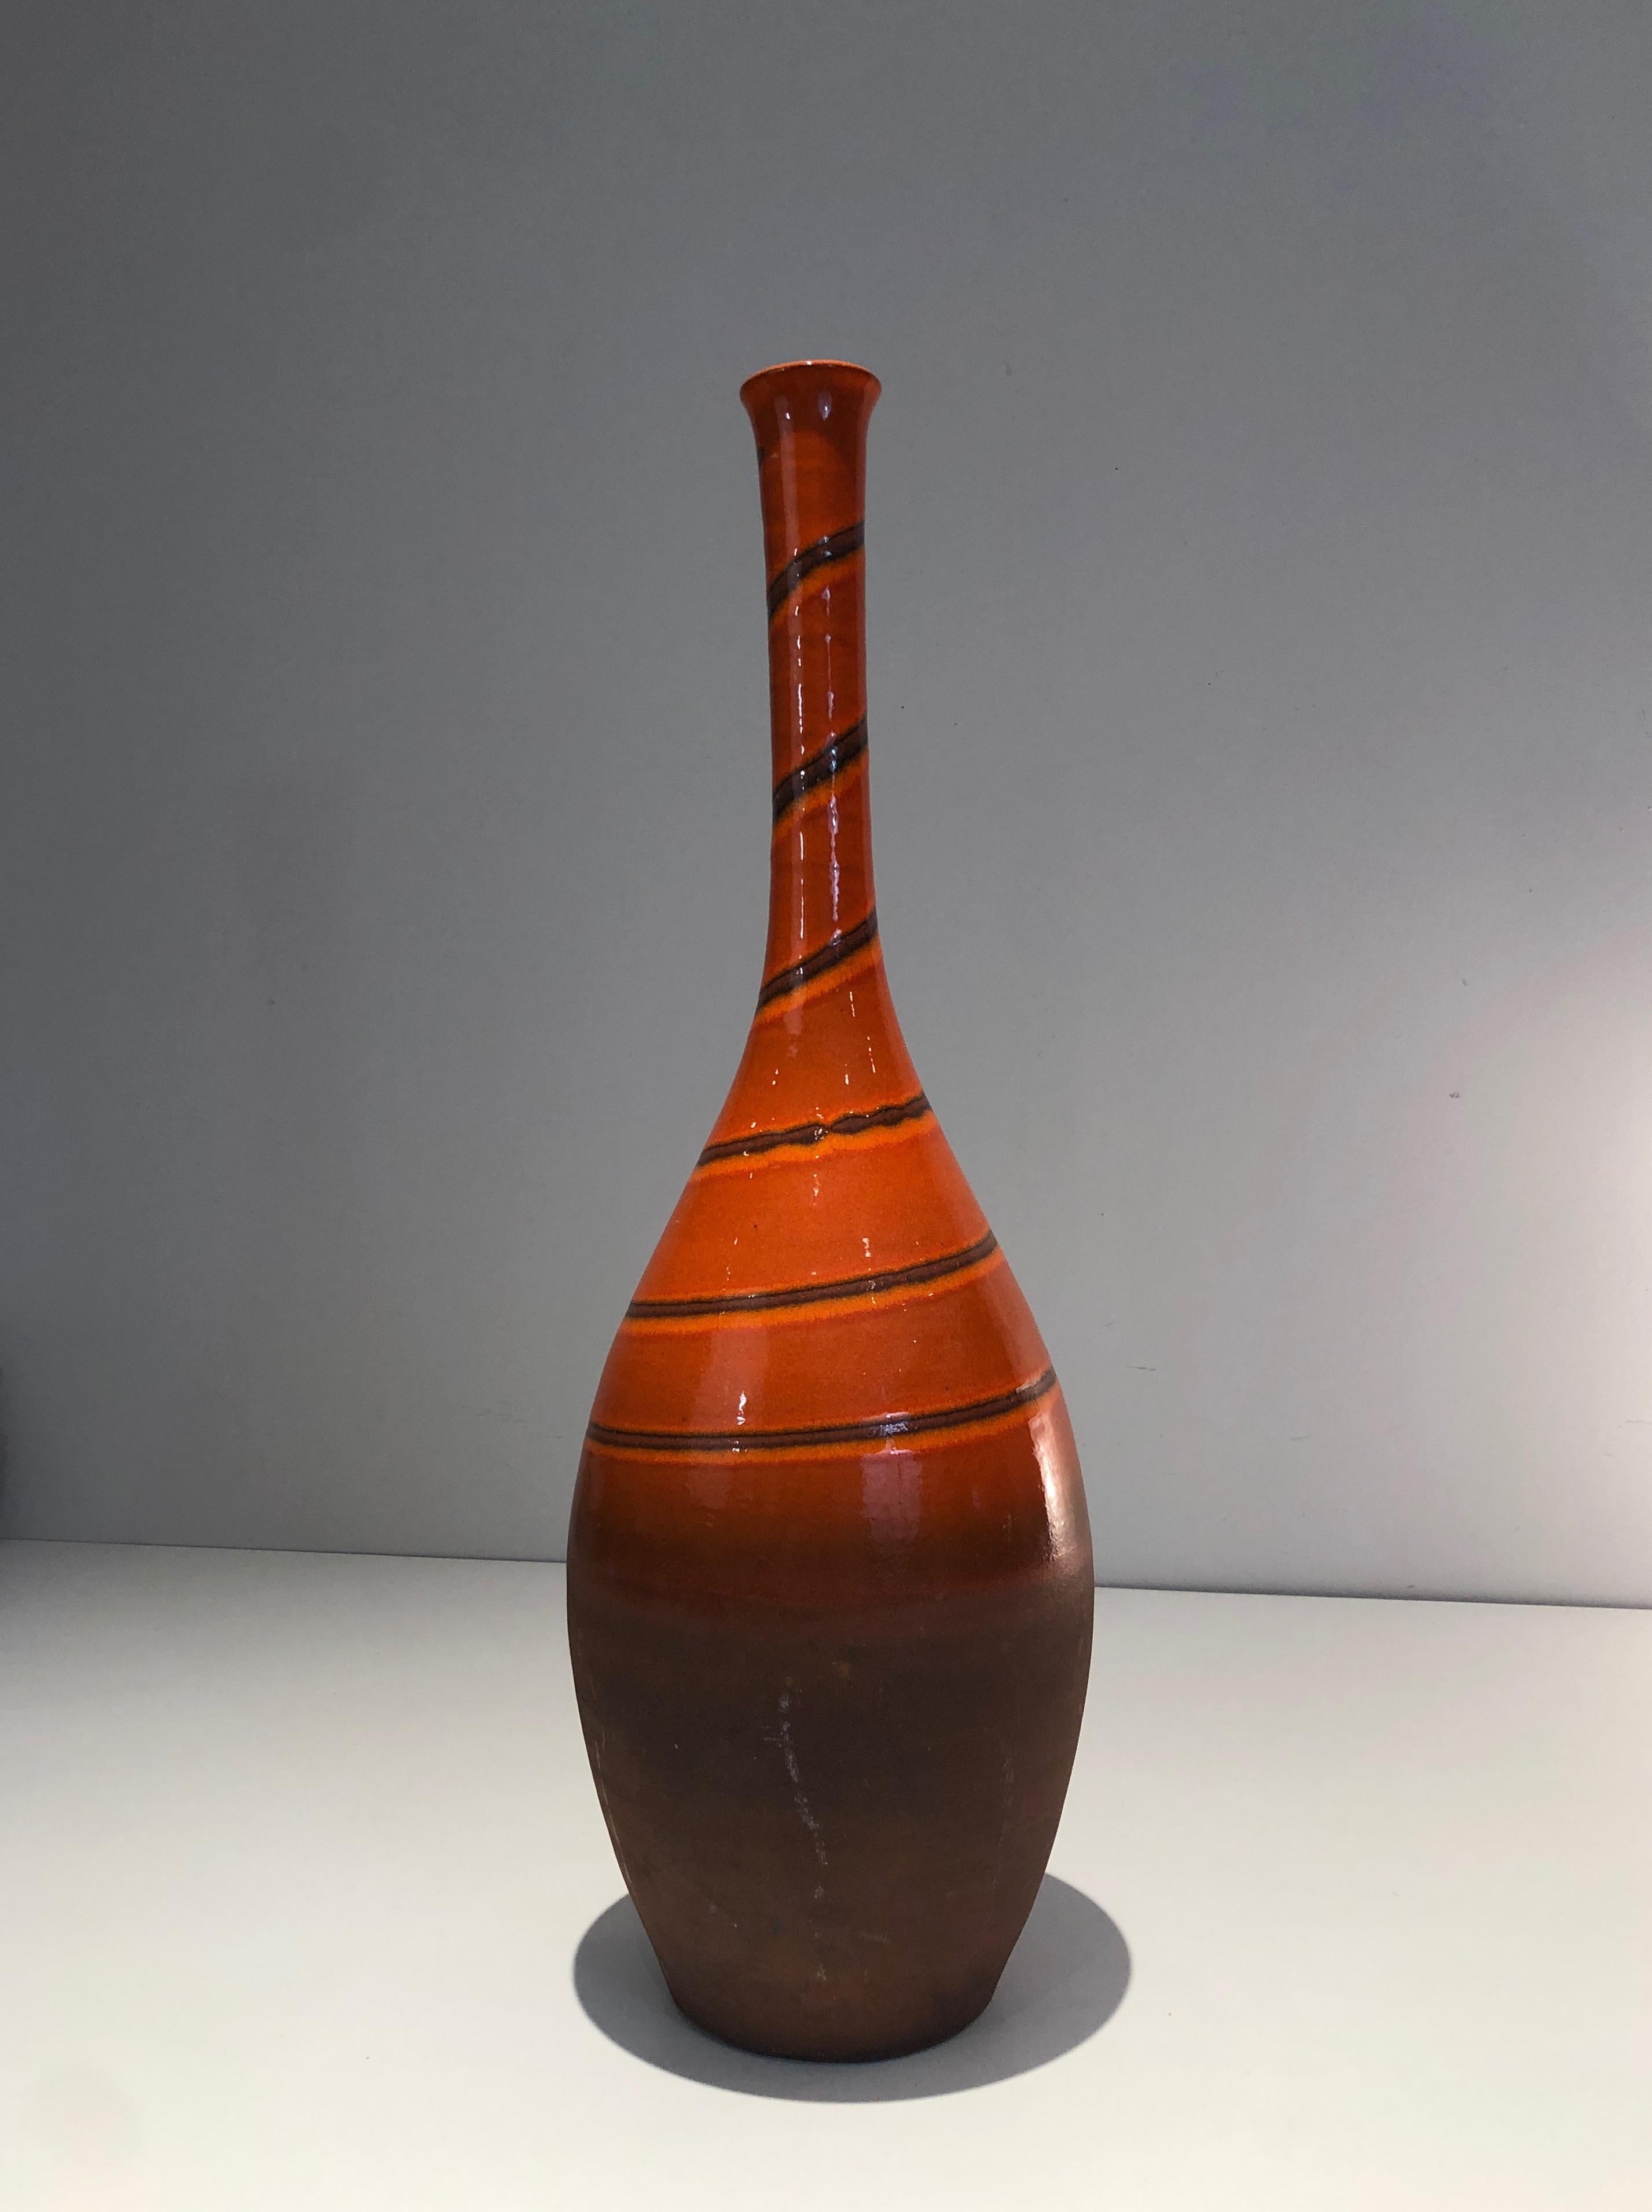 Tall ceramic vase in the red-orange tones. French work. Circa 1950.